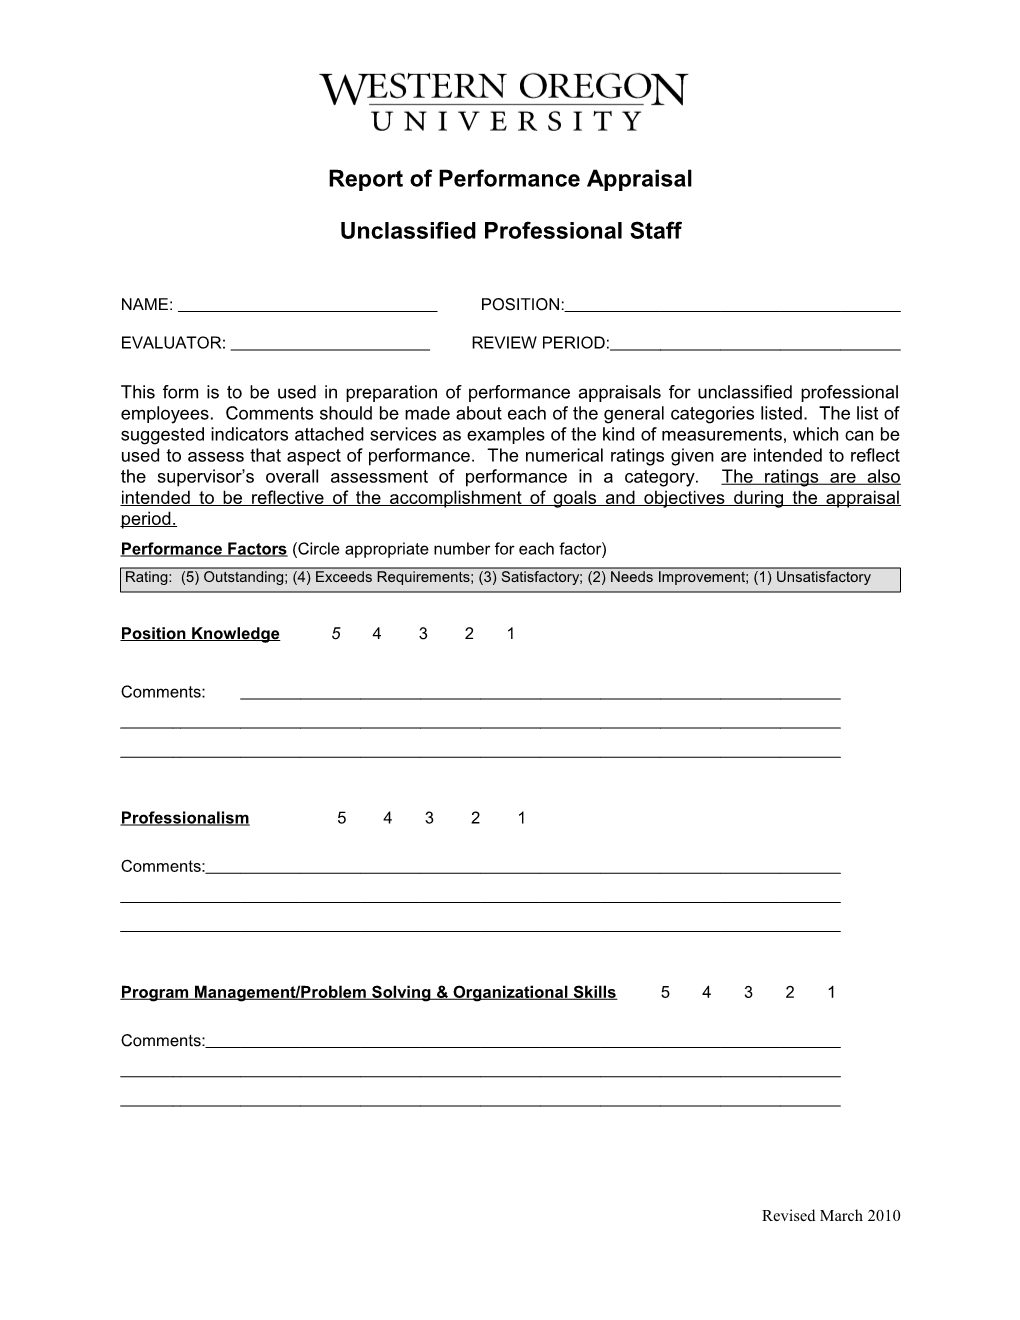 Unclassified Professional Staff Performance Appraisal